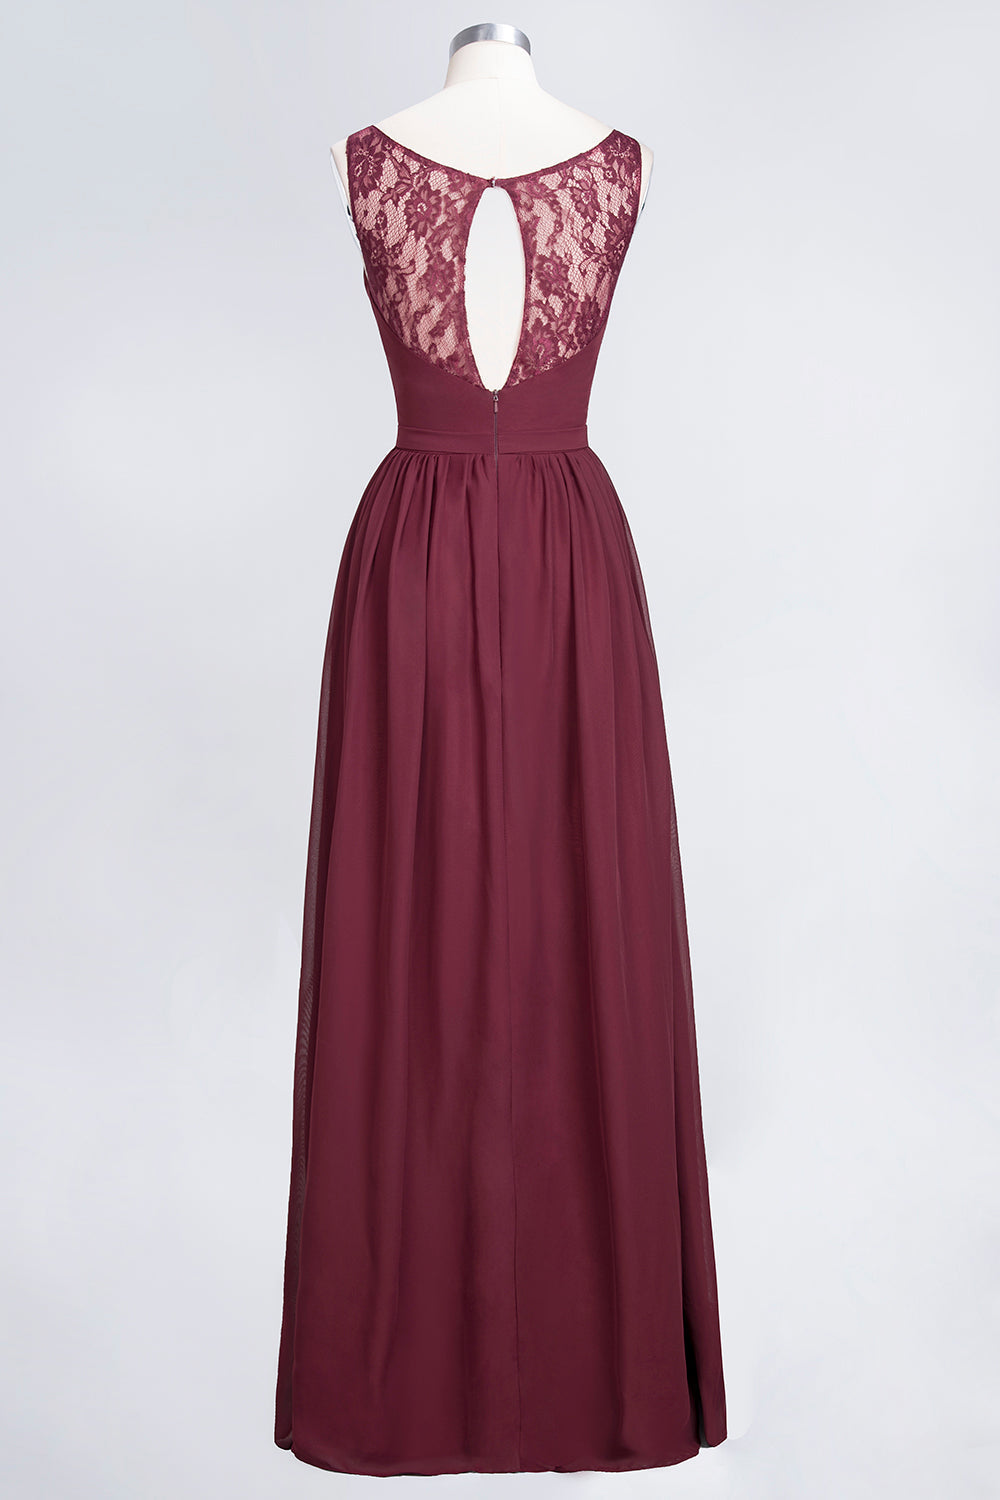 Chic Ruffles Straps Chiffon Lace Burgundy Bridsmaid Dress Online-27dress